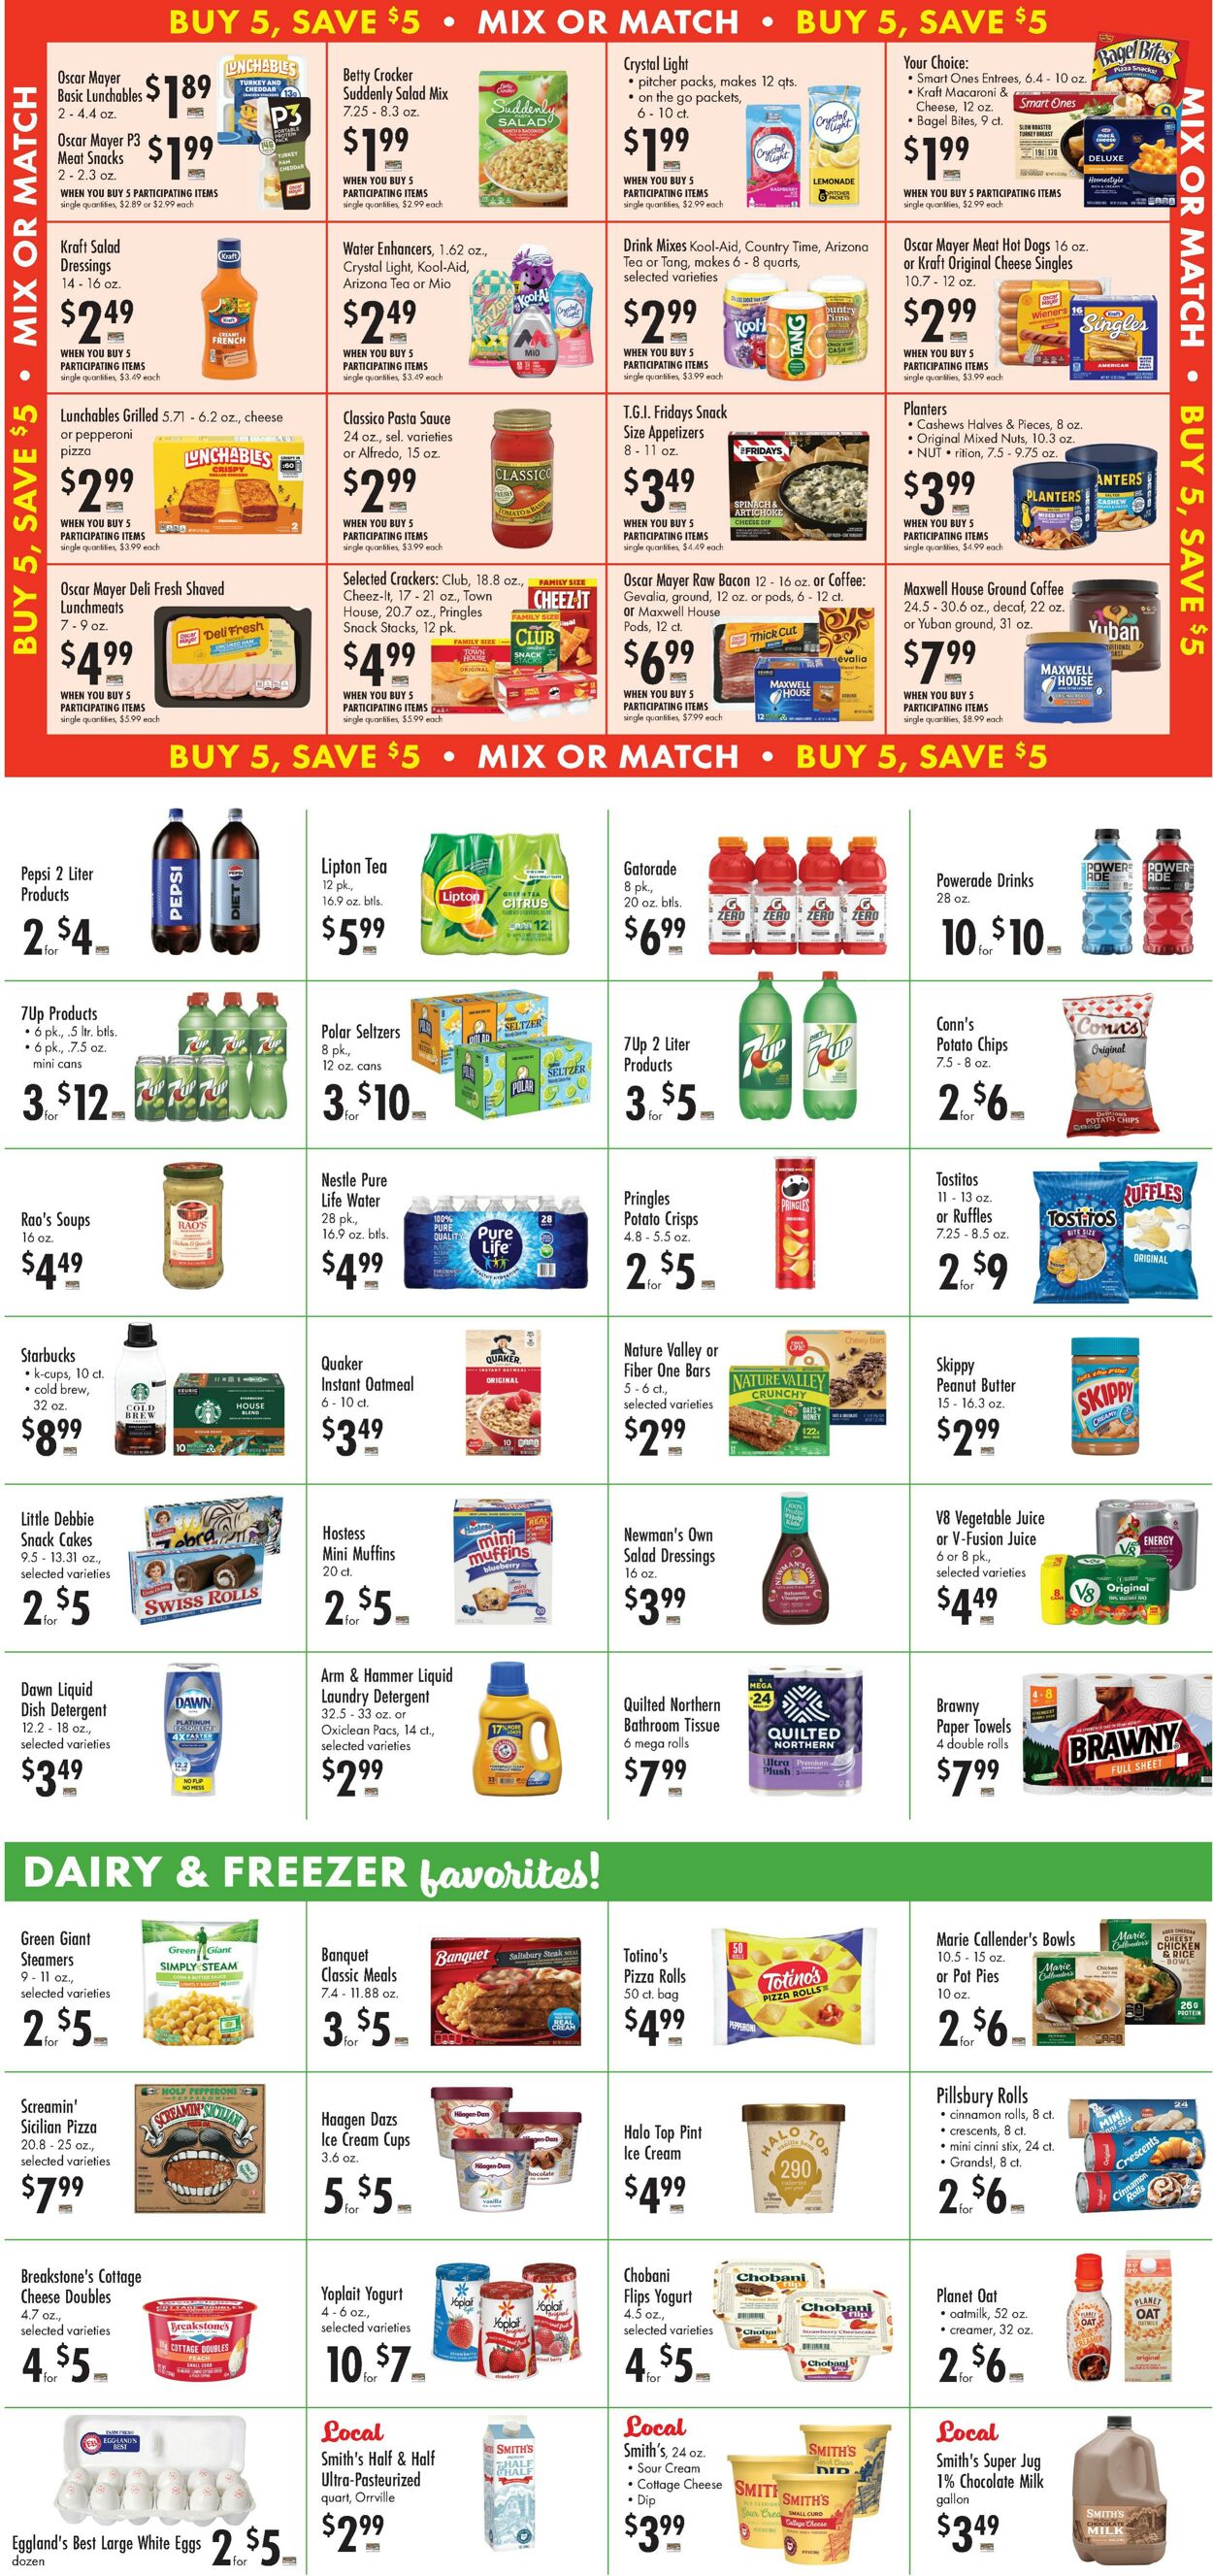 Weekly ad Buehler's Fresh Food 04/24/2024 - 04/30/2024